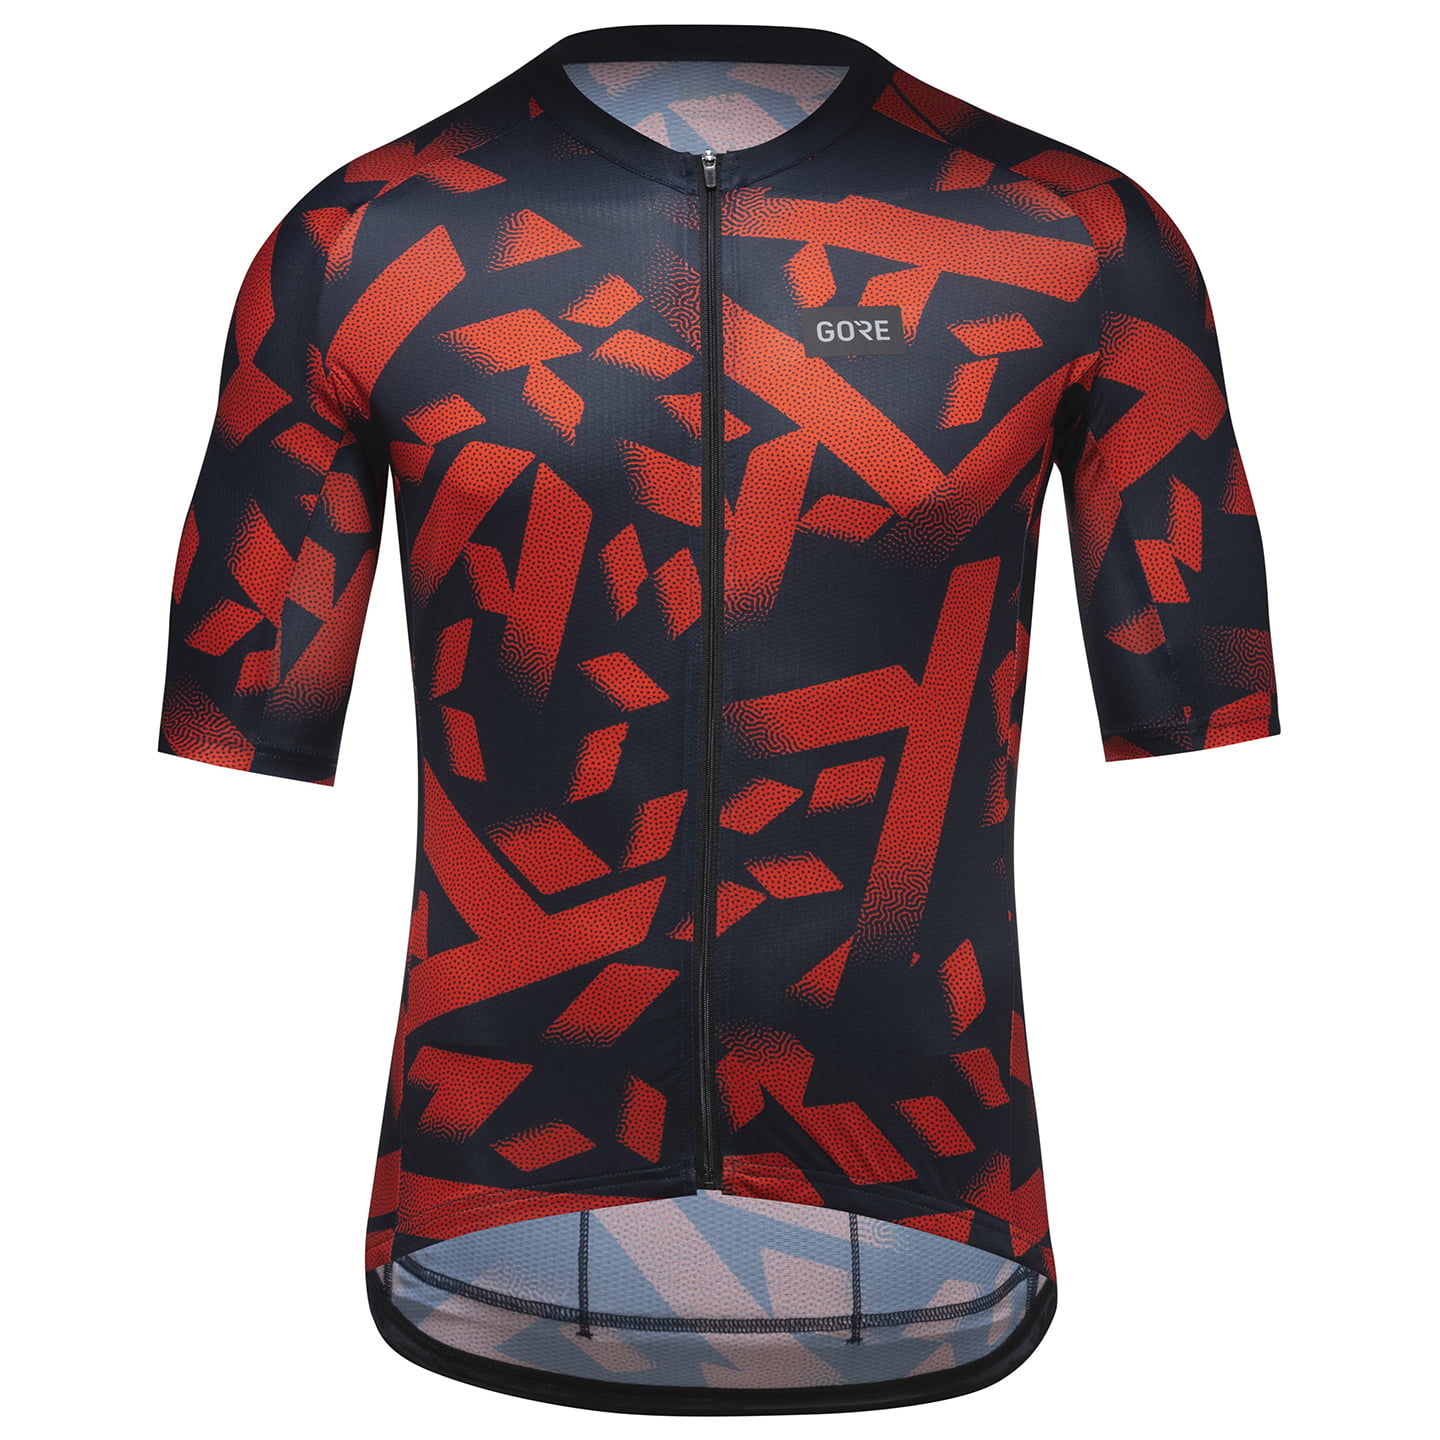 Spirit Signal Camo Short Sleeve Jersey Short Sleeve Jersey, for men, size L, Cycling jersey, Cycling clothing